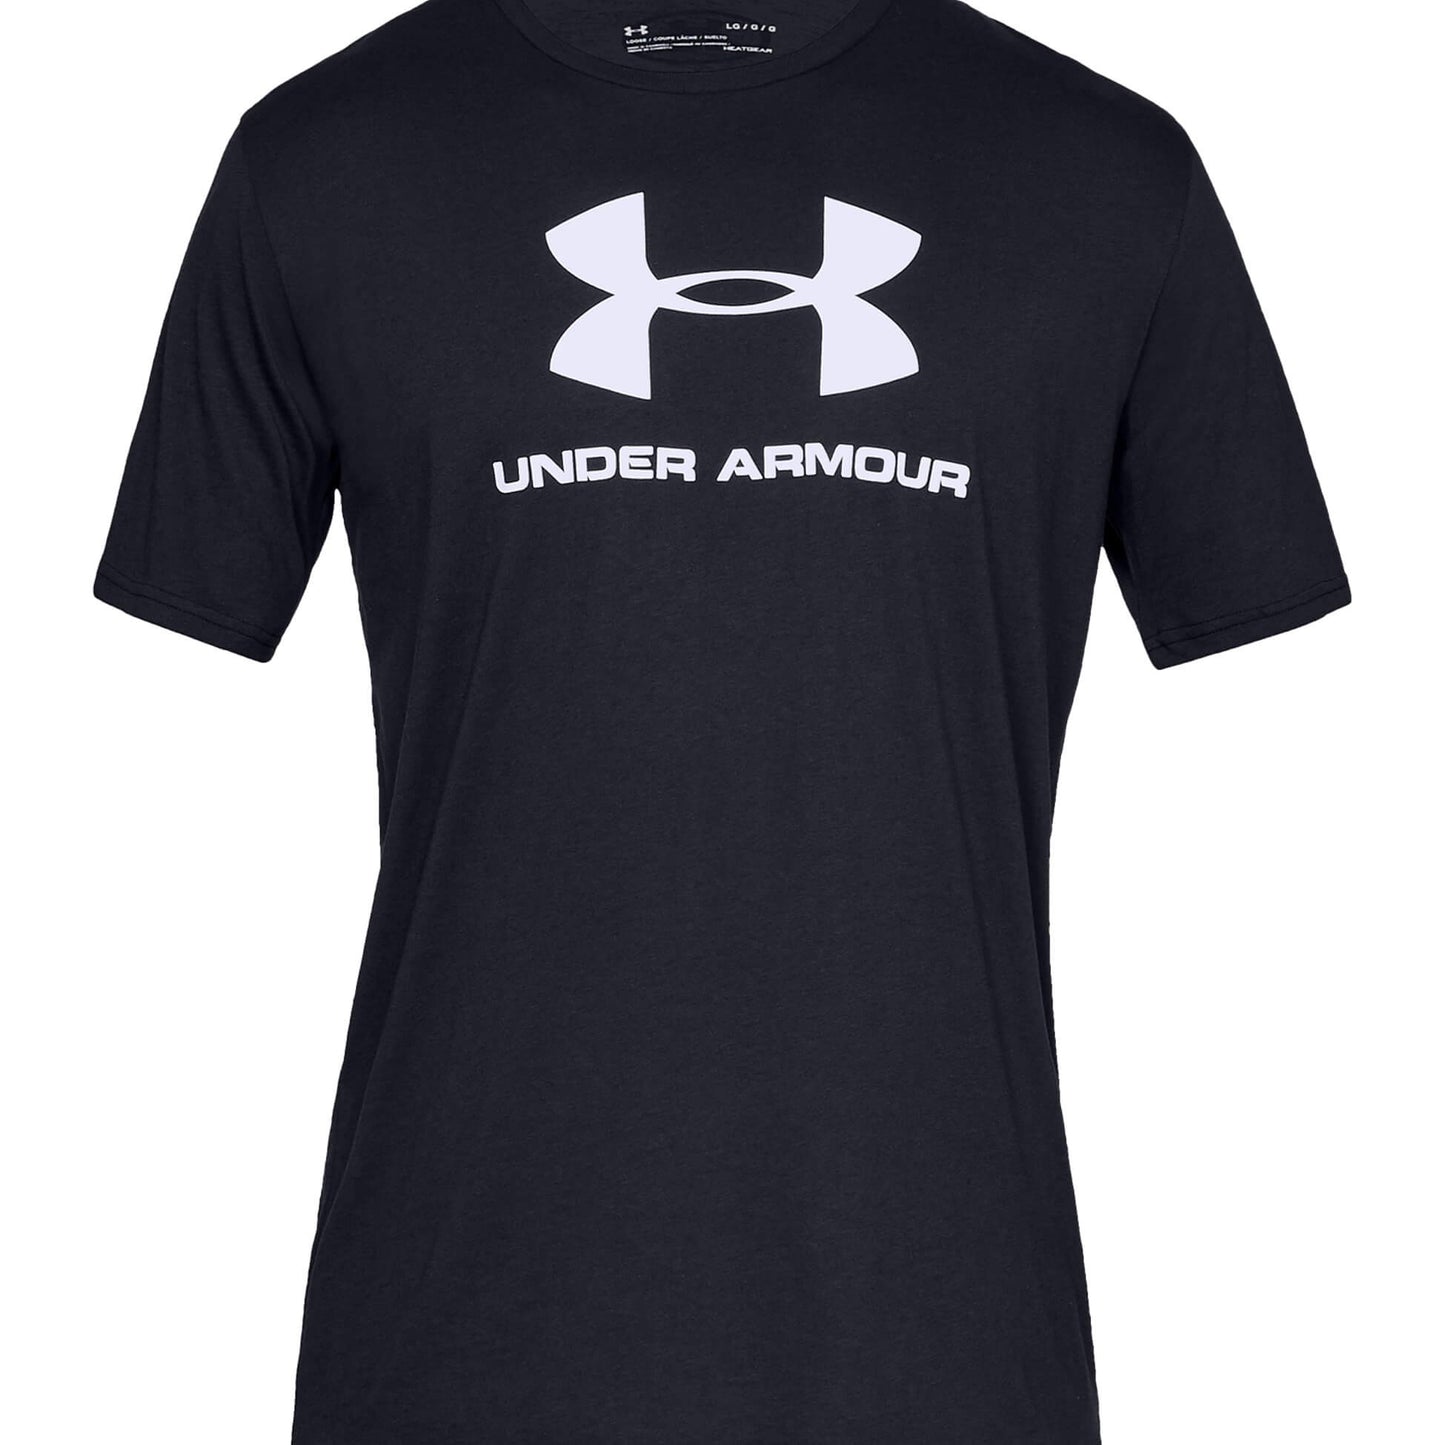 Under Armour Sportstyle Logo Short Sleeve Black